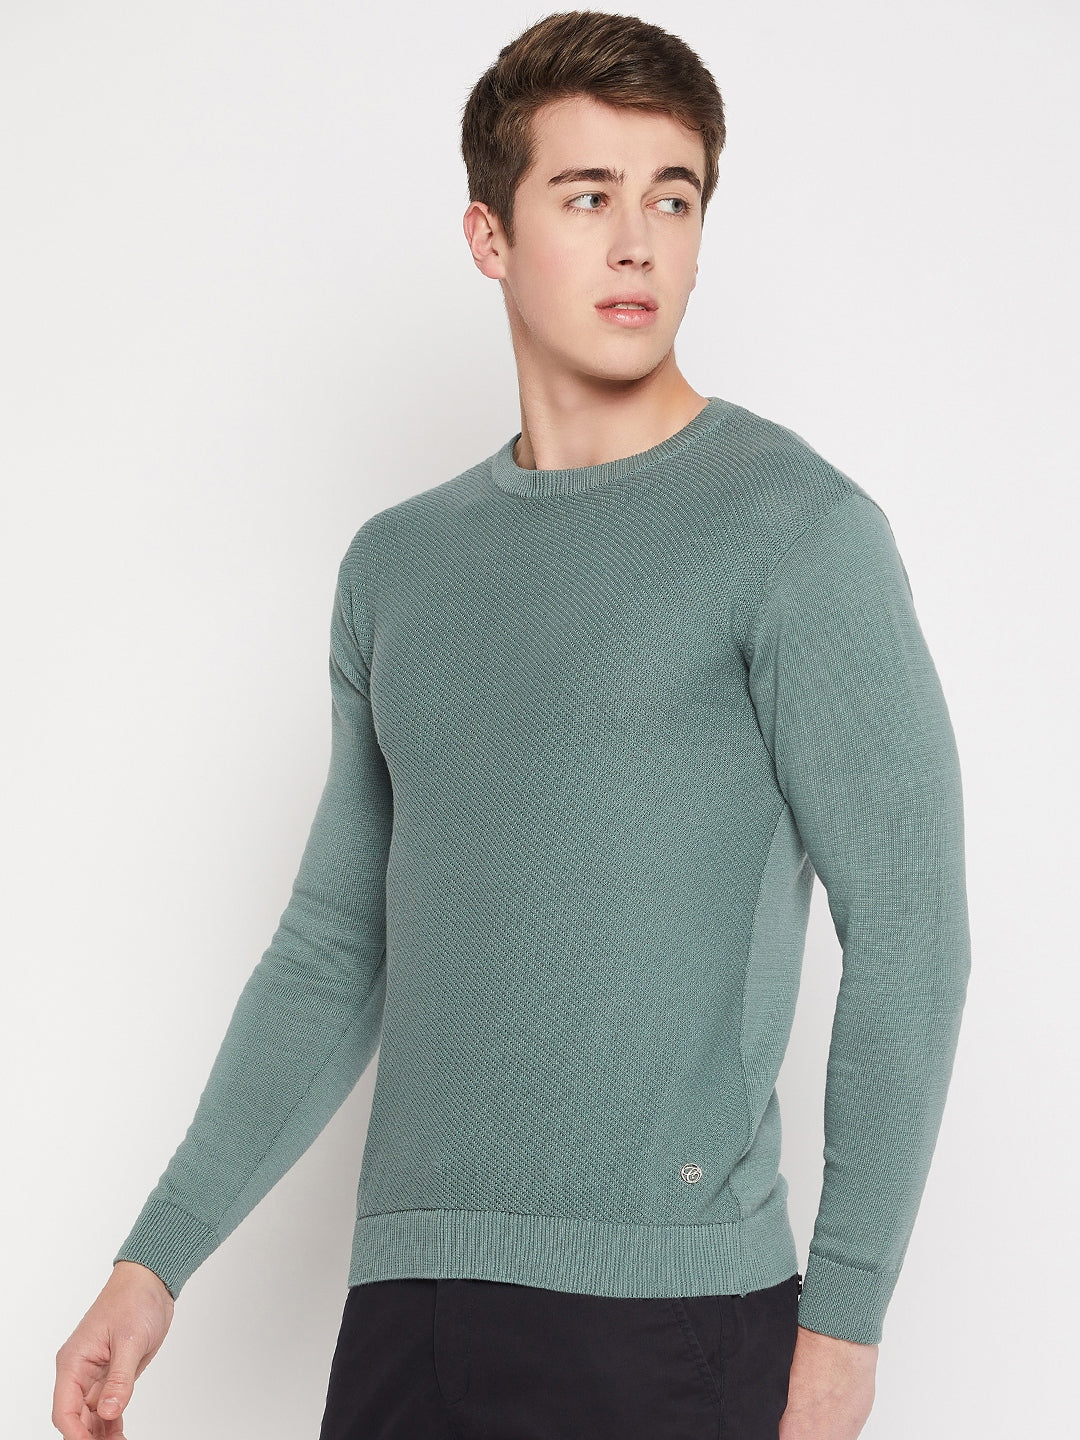 Camla Barcelona Crew Neck Teal Green Sweater for Men